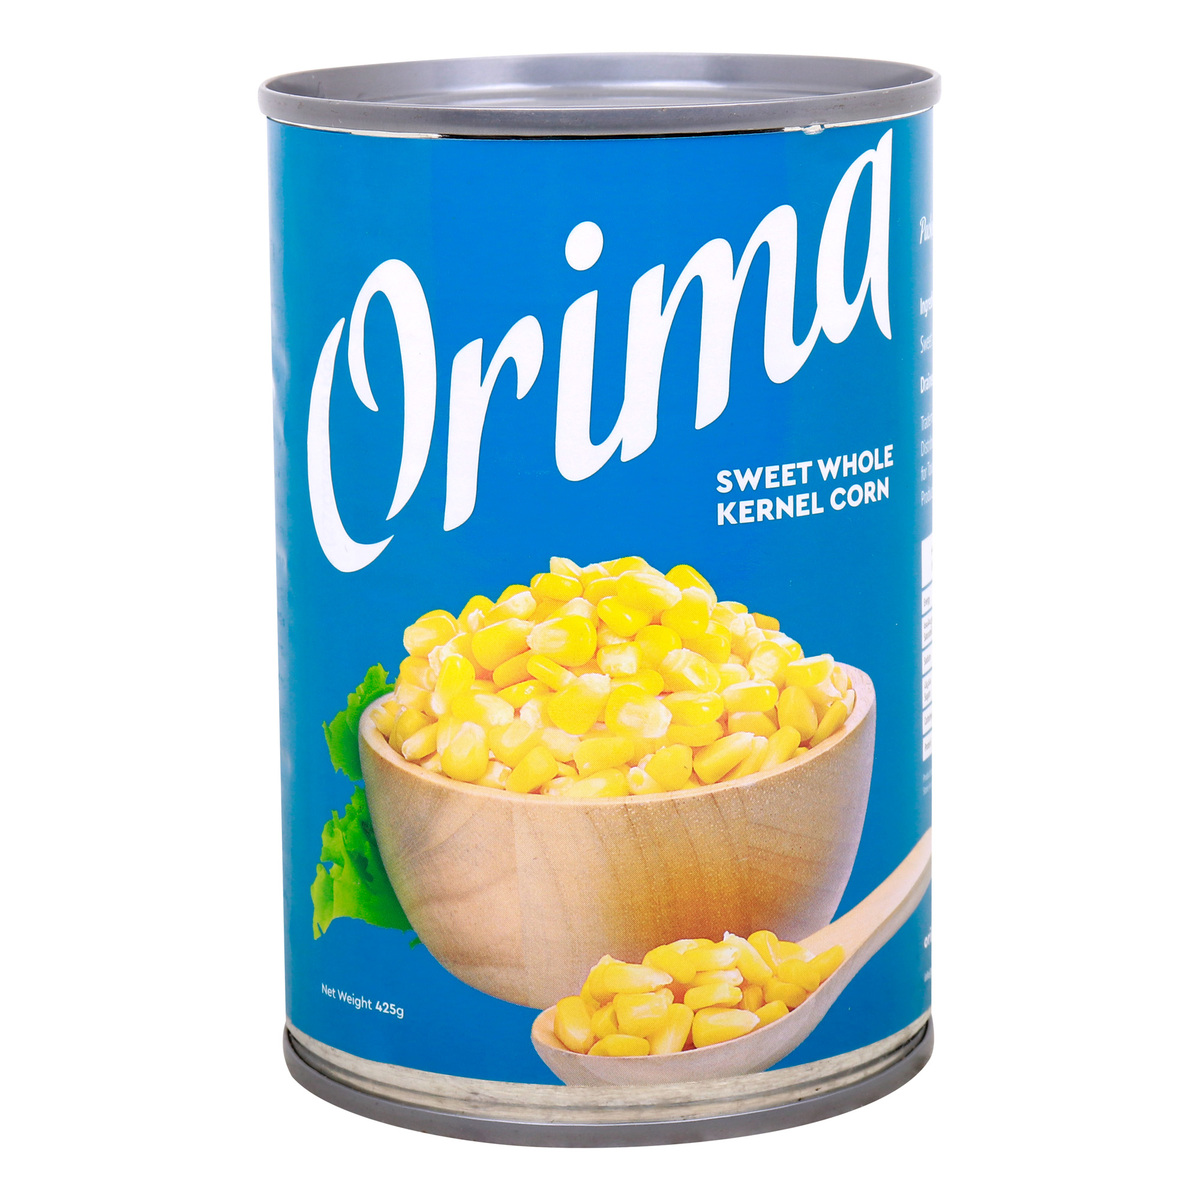 Orima Sweet Whole Kernel Corn 425 g